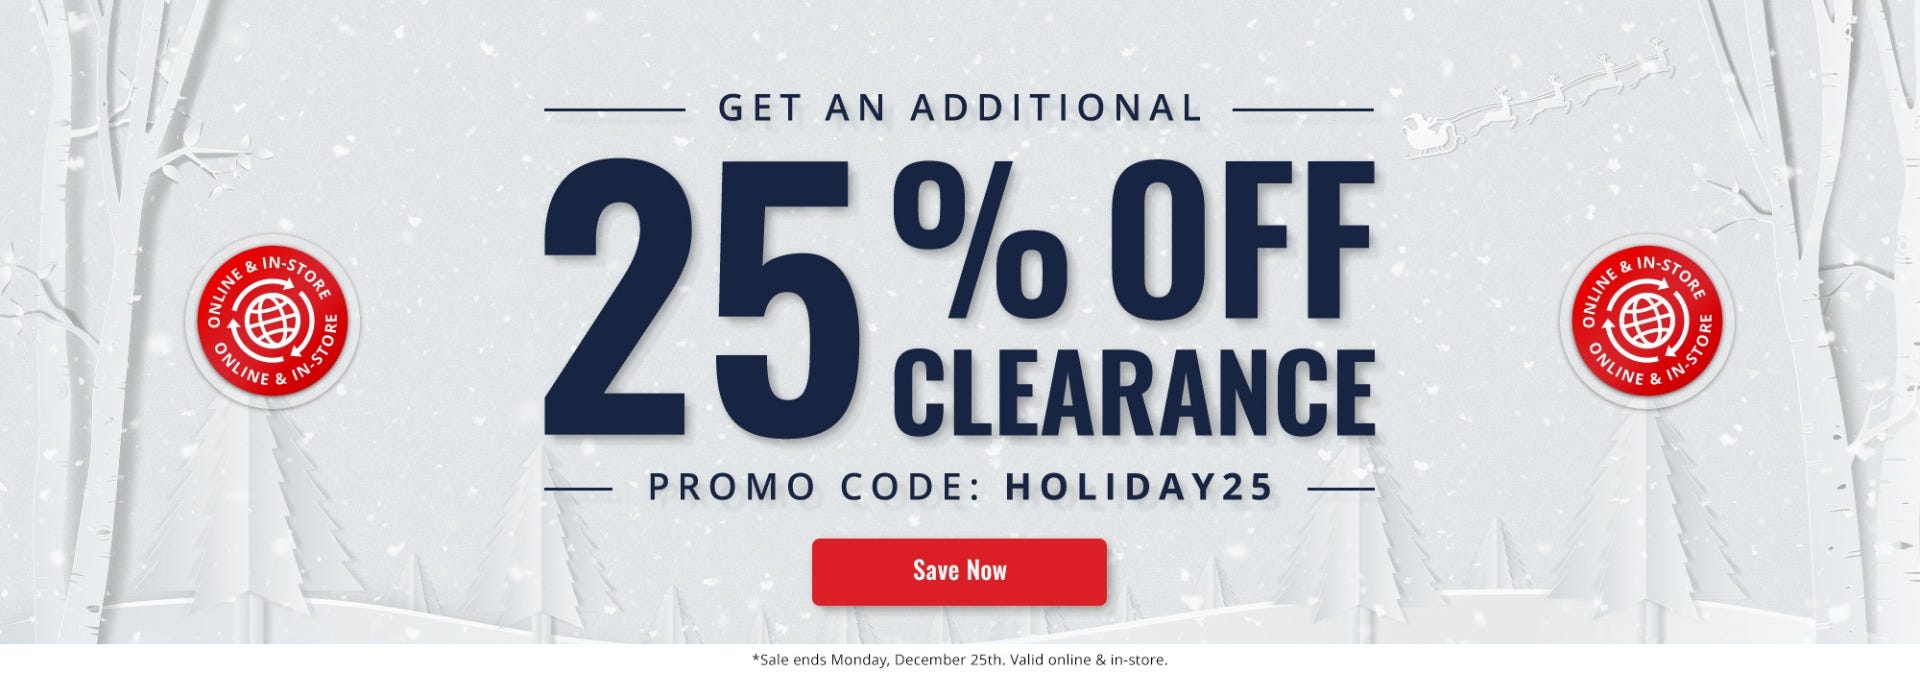 GoalieMonkey Holiday Savings: 25% off clearance